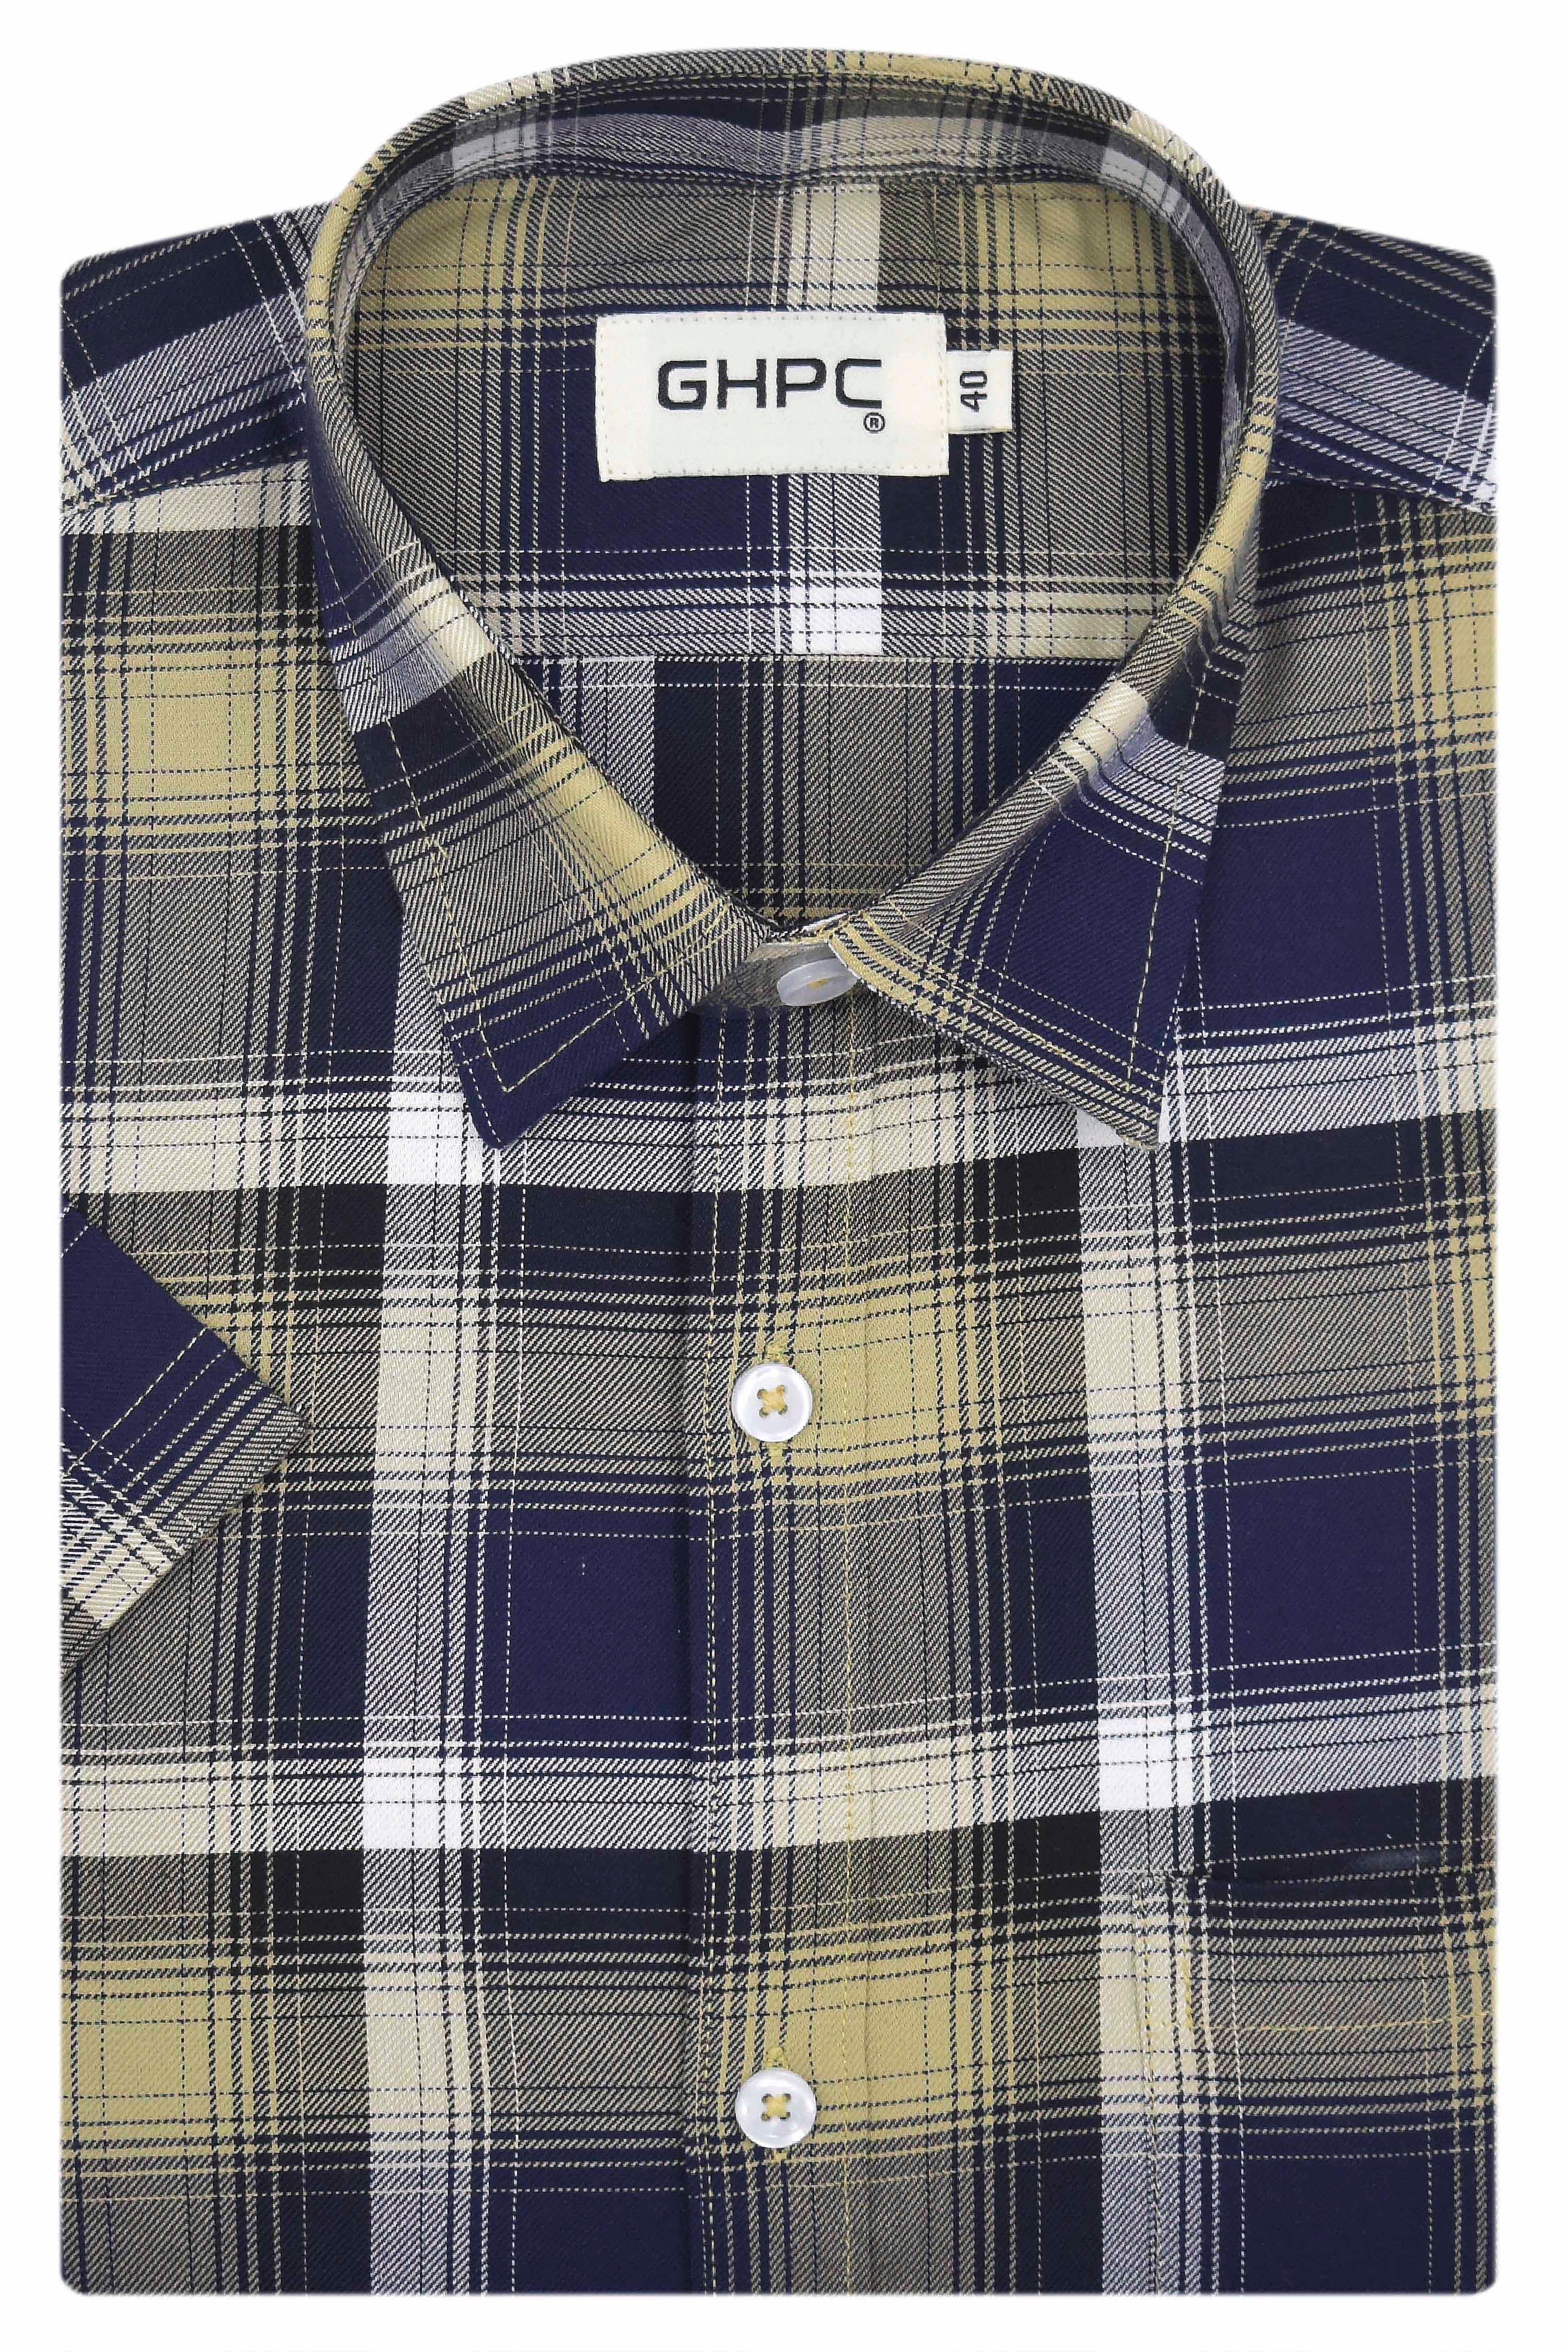 Men's 100% Cotton Madras Checkered Half Sleeves Shirt (Navy)